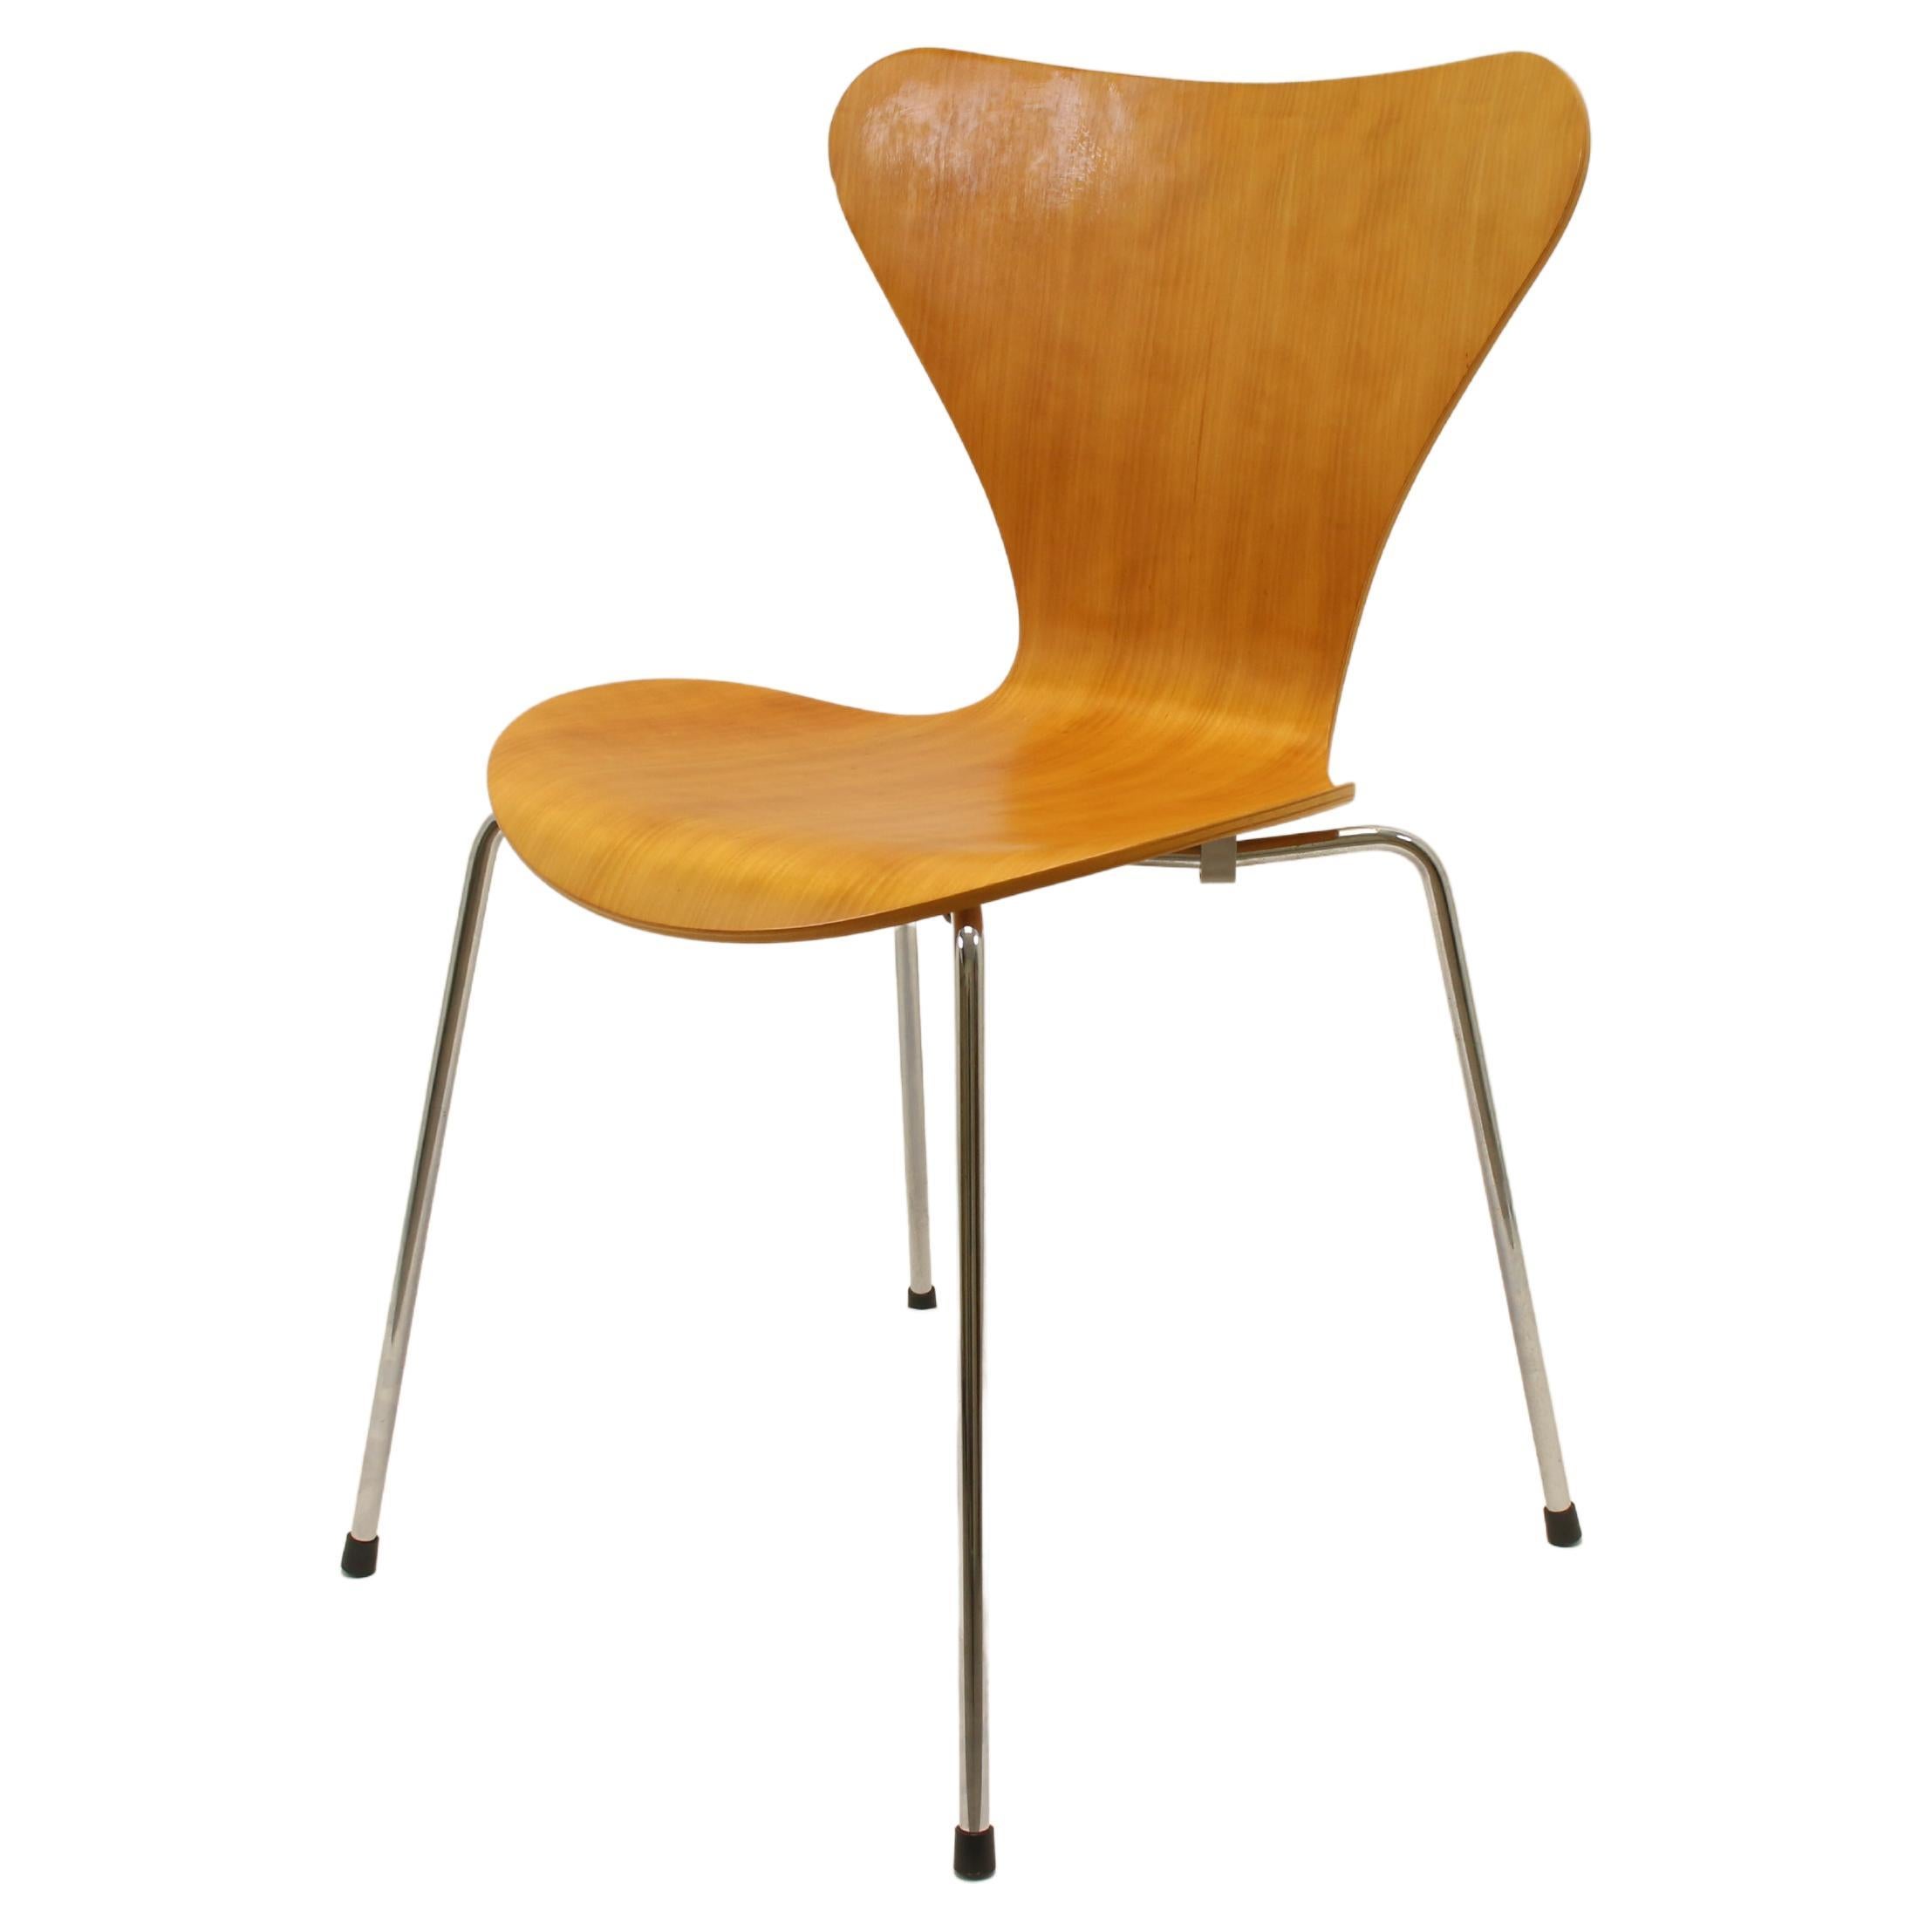 Arne Jacobsen "Butterfly" Chair Model 3107